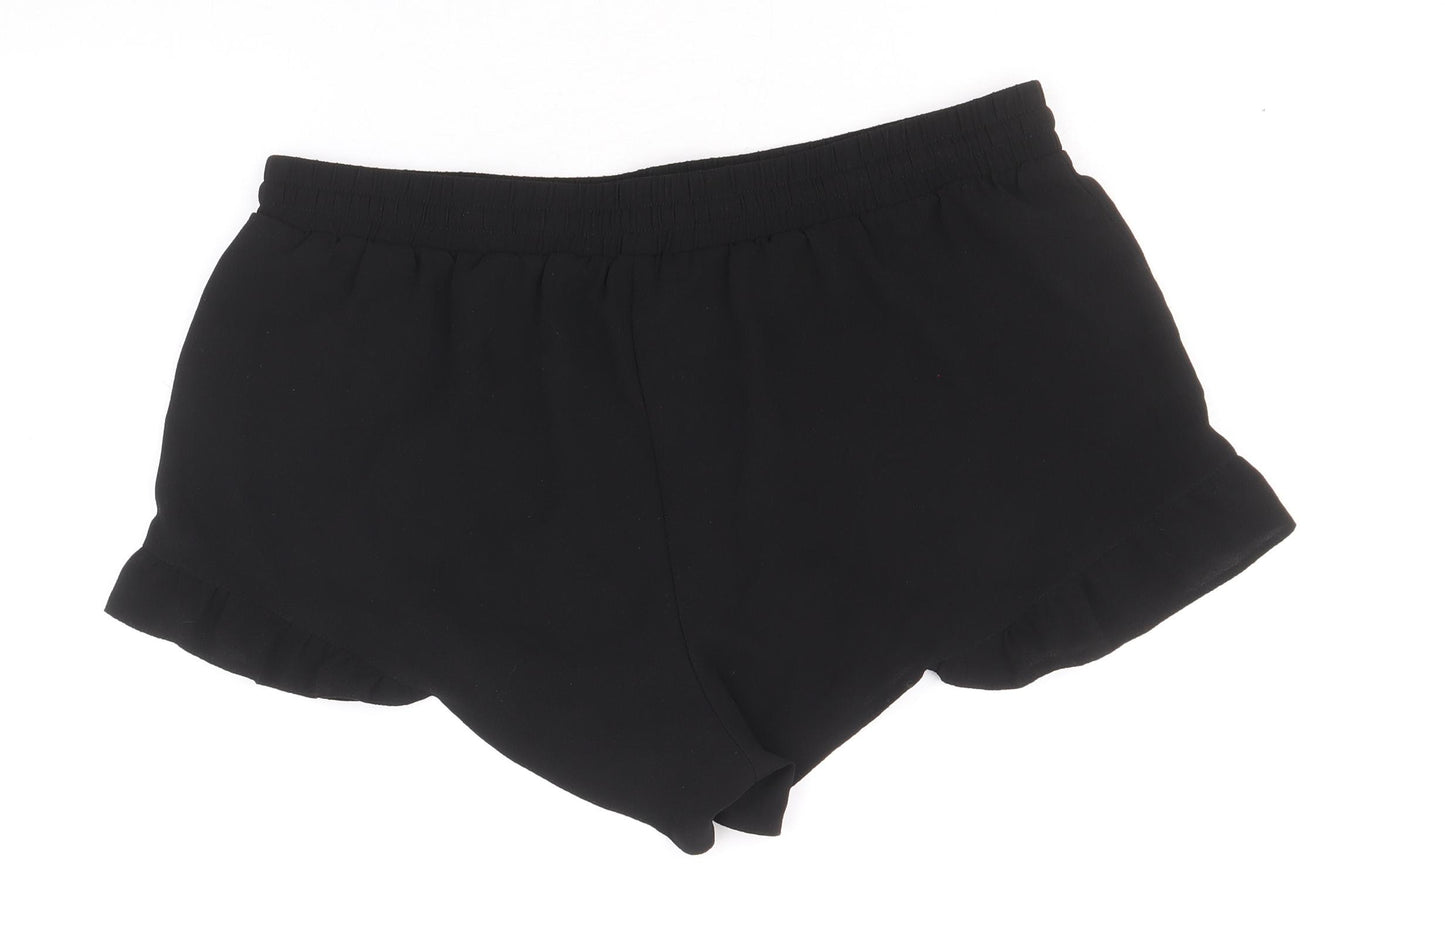 Papaya Womens Black Polyester Hot Pants Shorts Size 12 Regular Drawstring